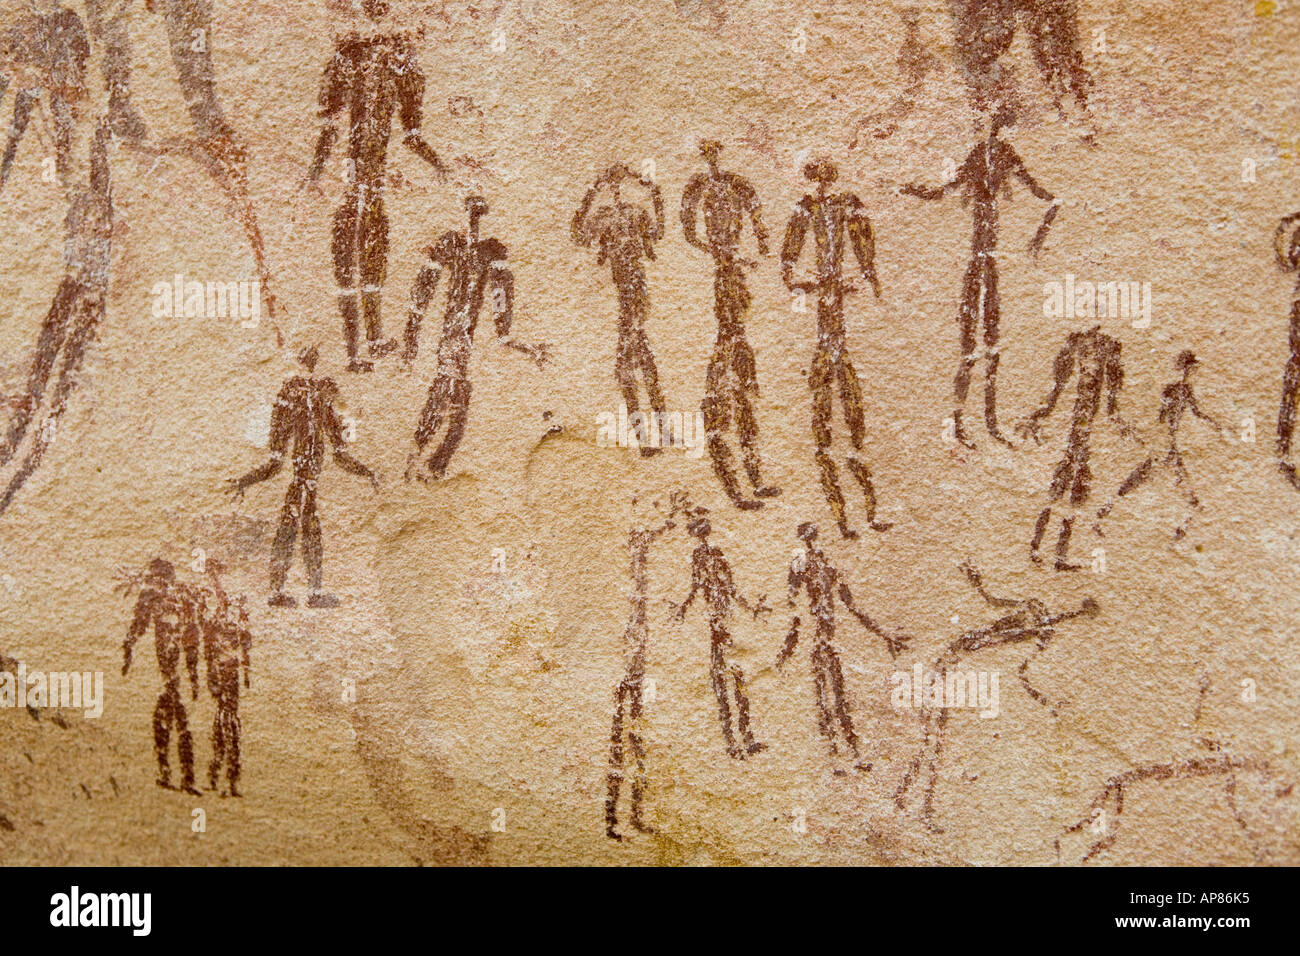 Tribal scene with many people - Rock art, Mestekawi Cave, Gilf Kebir, Egypt's Western desert. Stock Photo